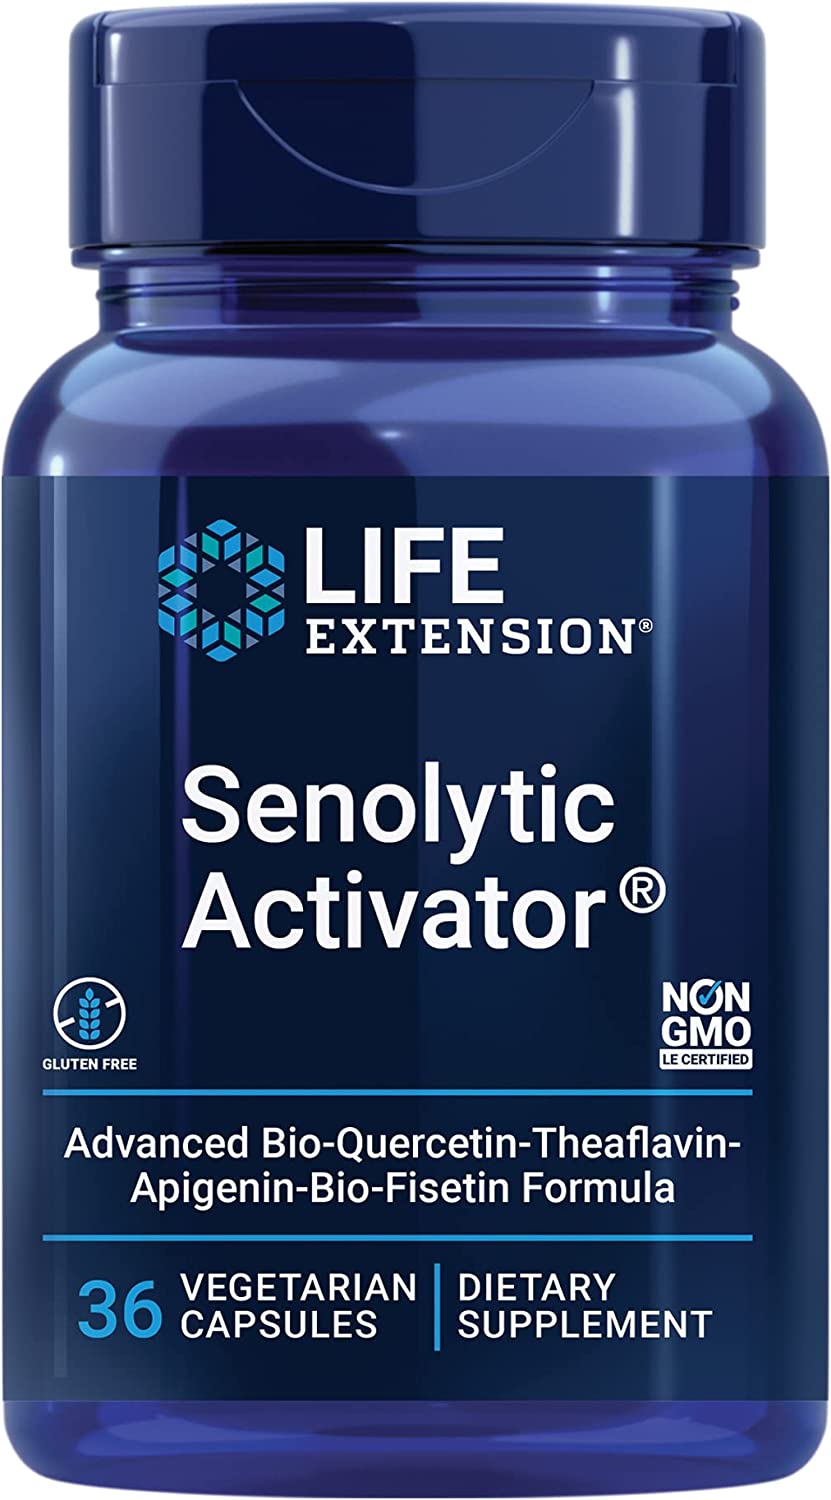 Life Extension Senolytic Activator®